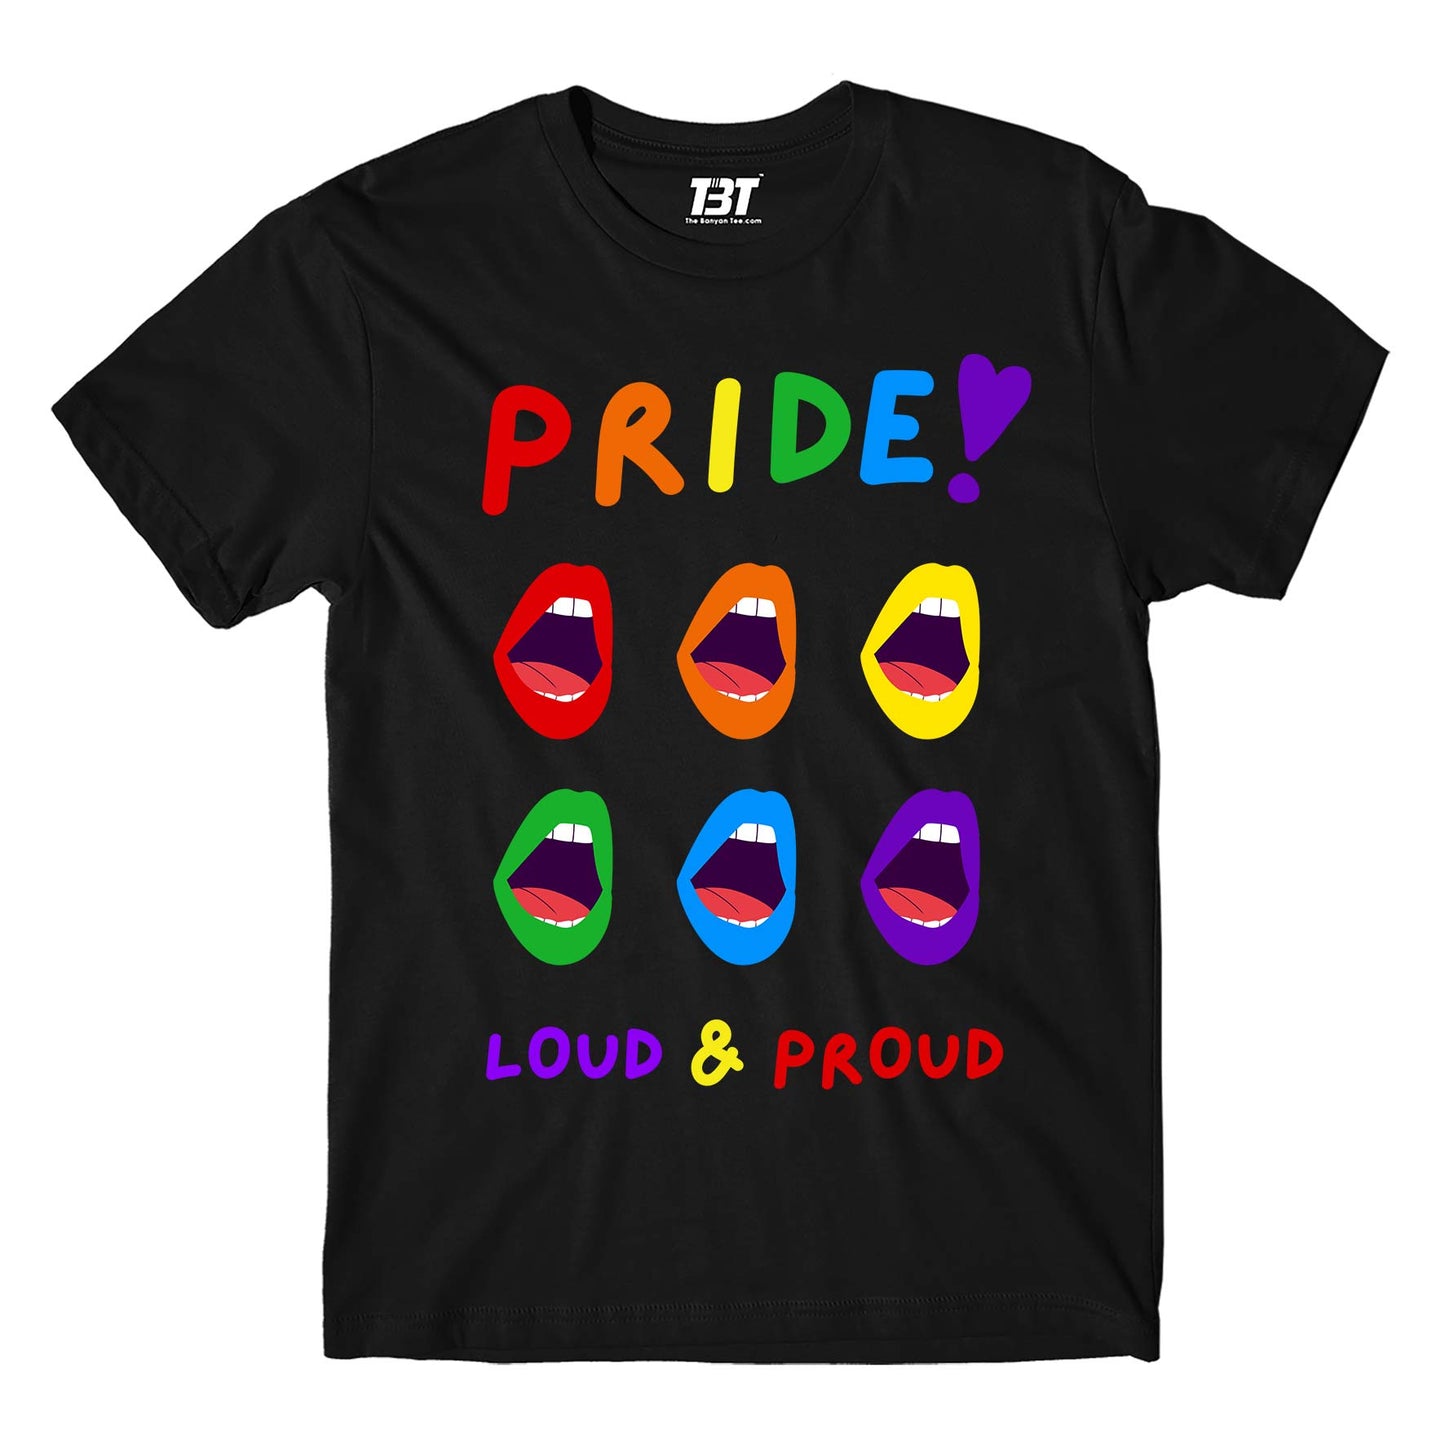 pride loud and proud t-shirt printed graphic stylish buy online india the banyan tee tbt men women girls boys unisex black - lgbtqia+  Edit alt text